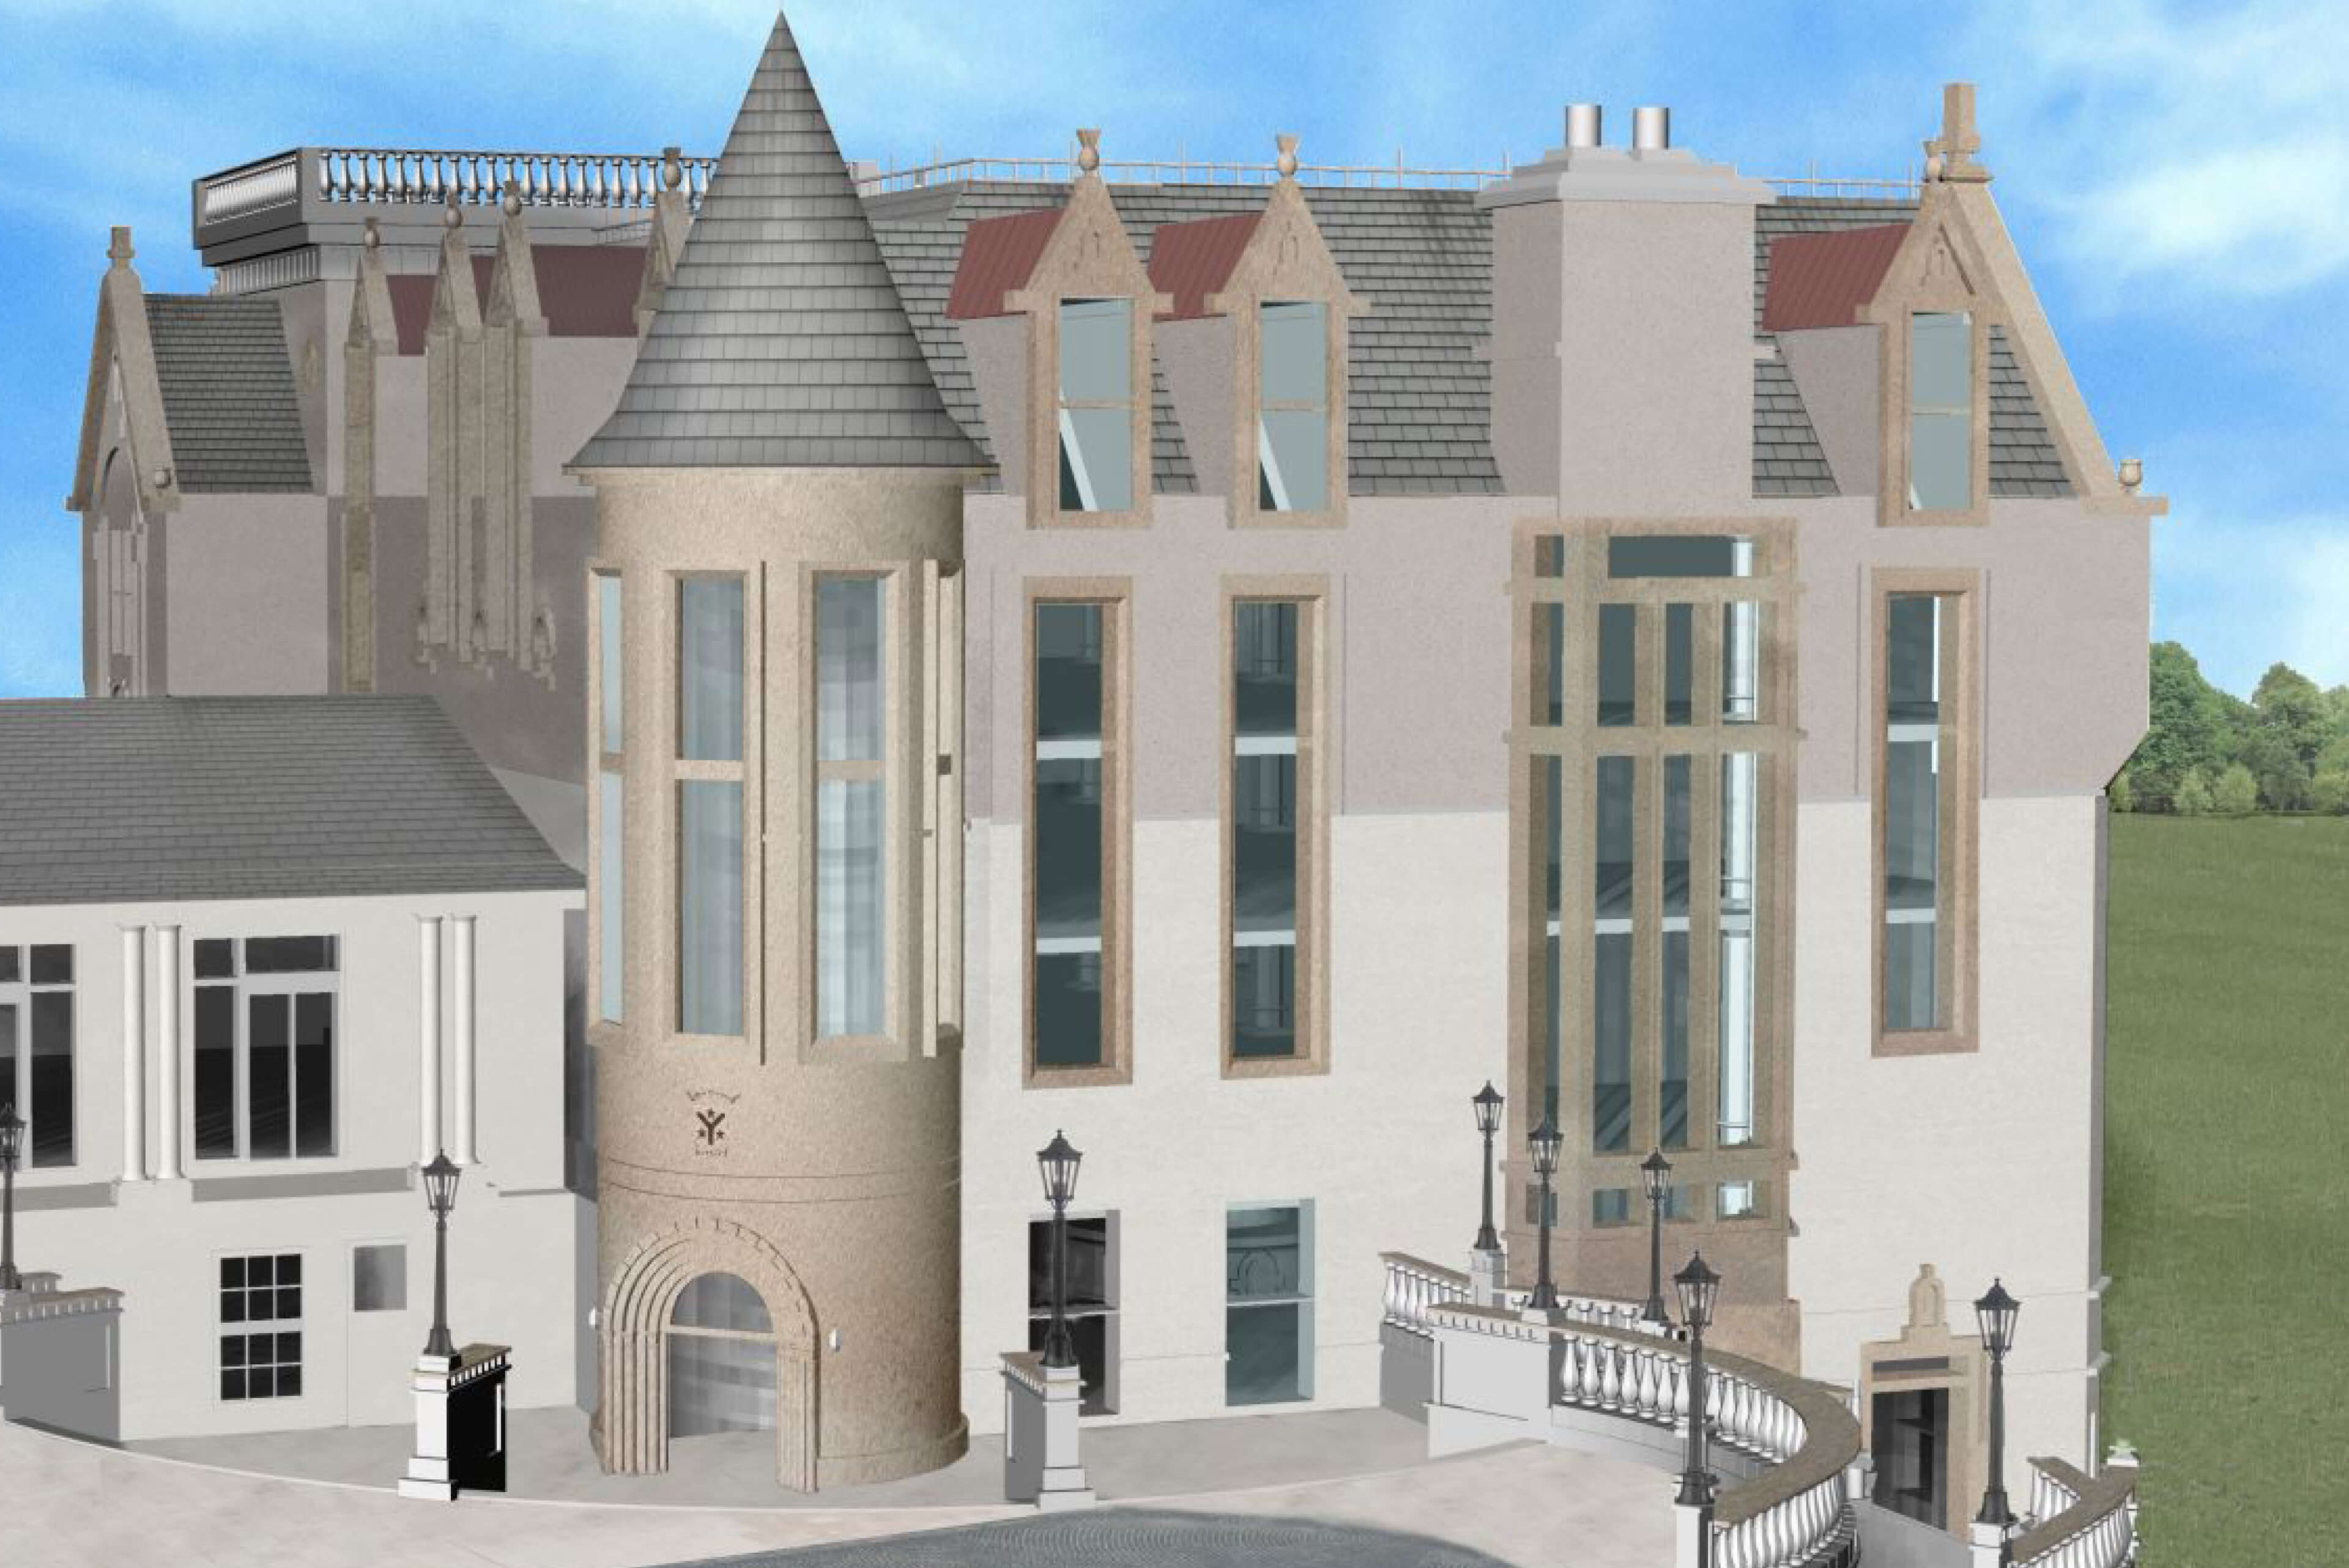 3 alternate artist render the scots college john cunningham student centre taylor construction education